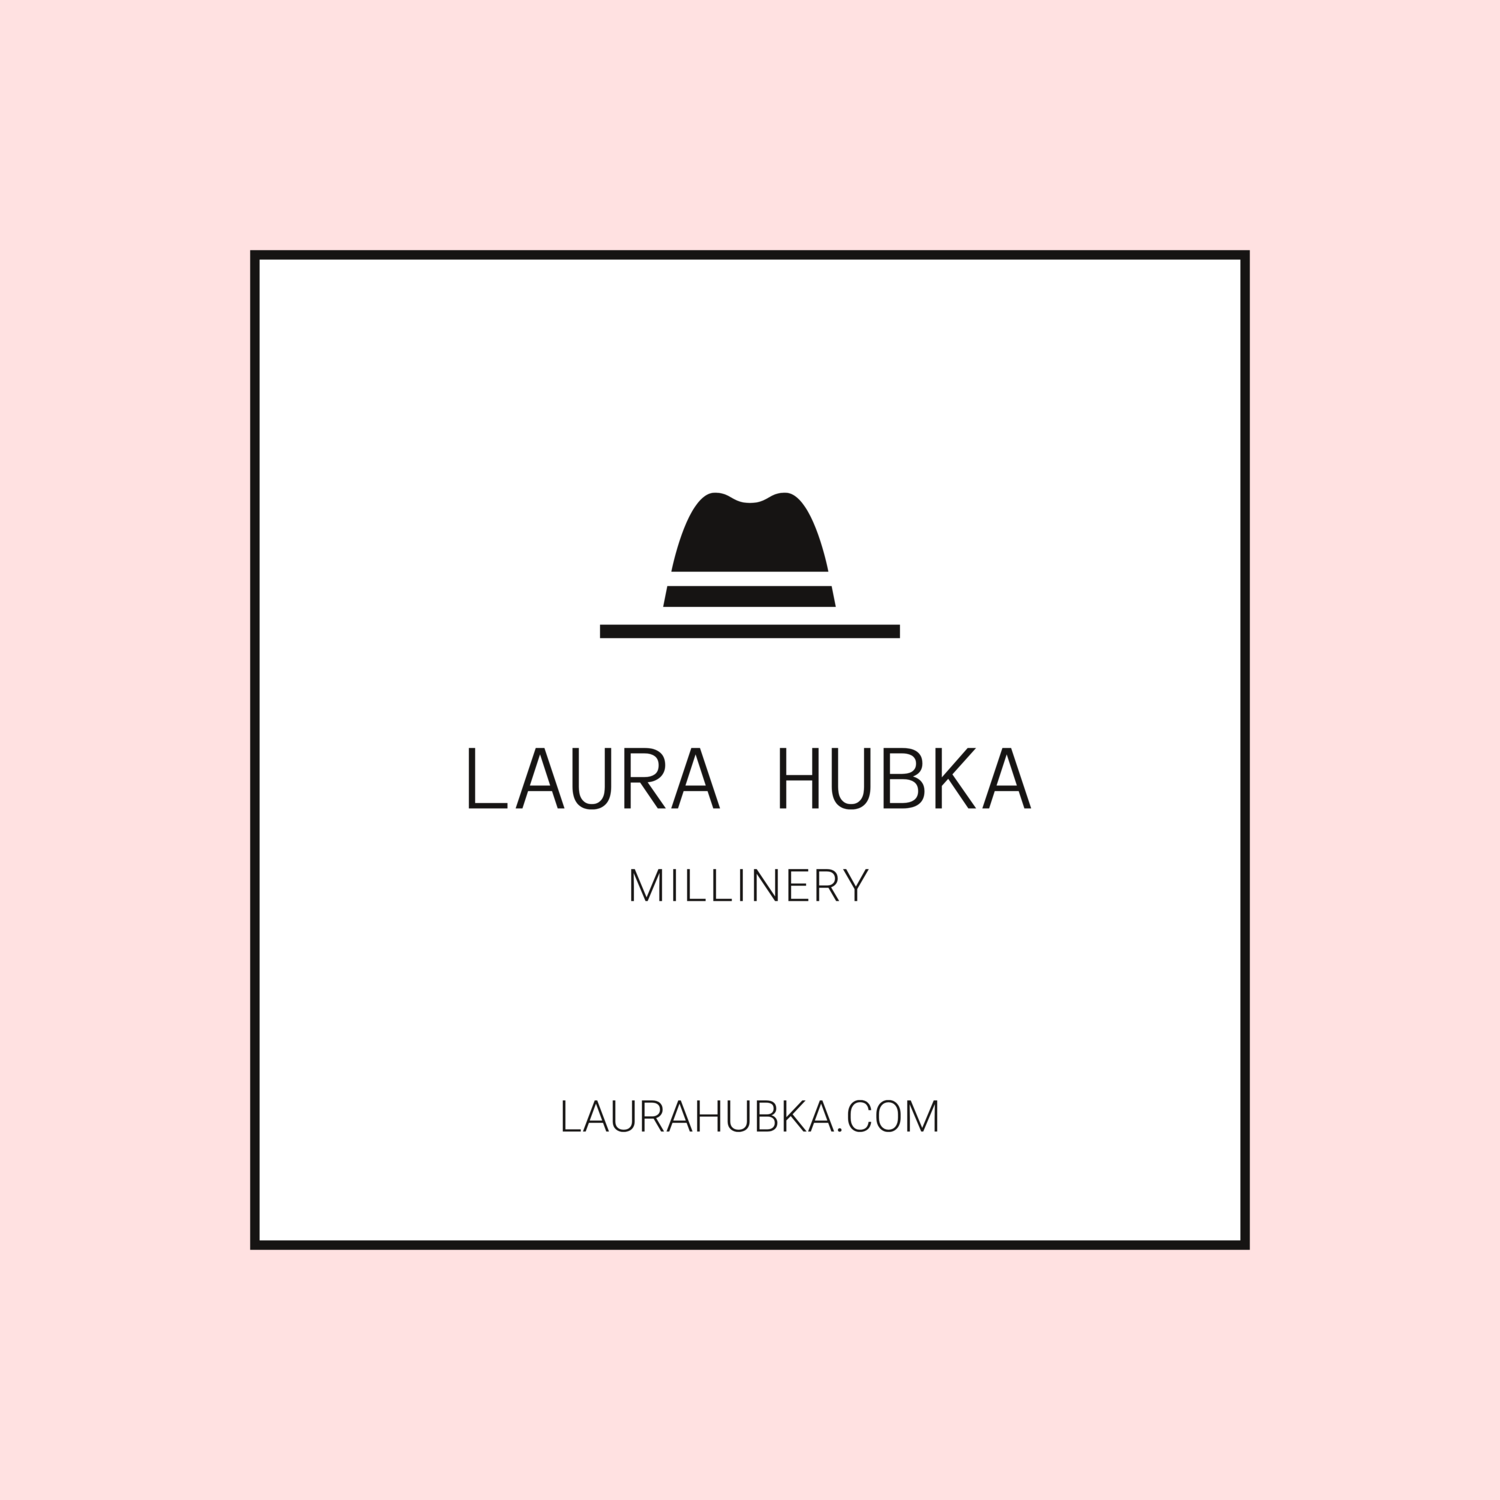 Laura Hubka Millinery